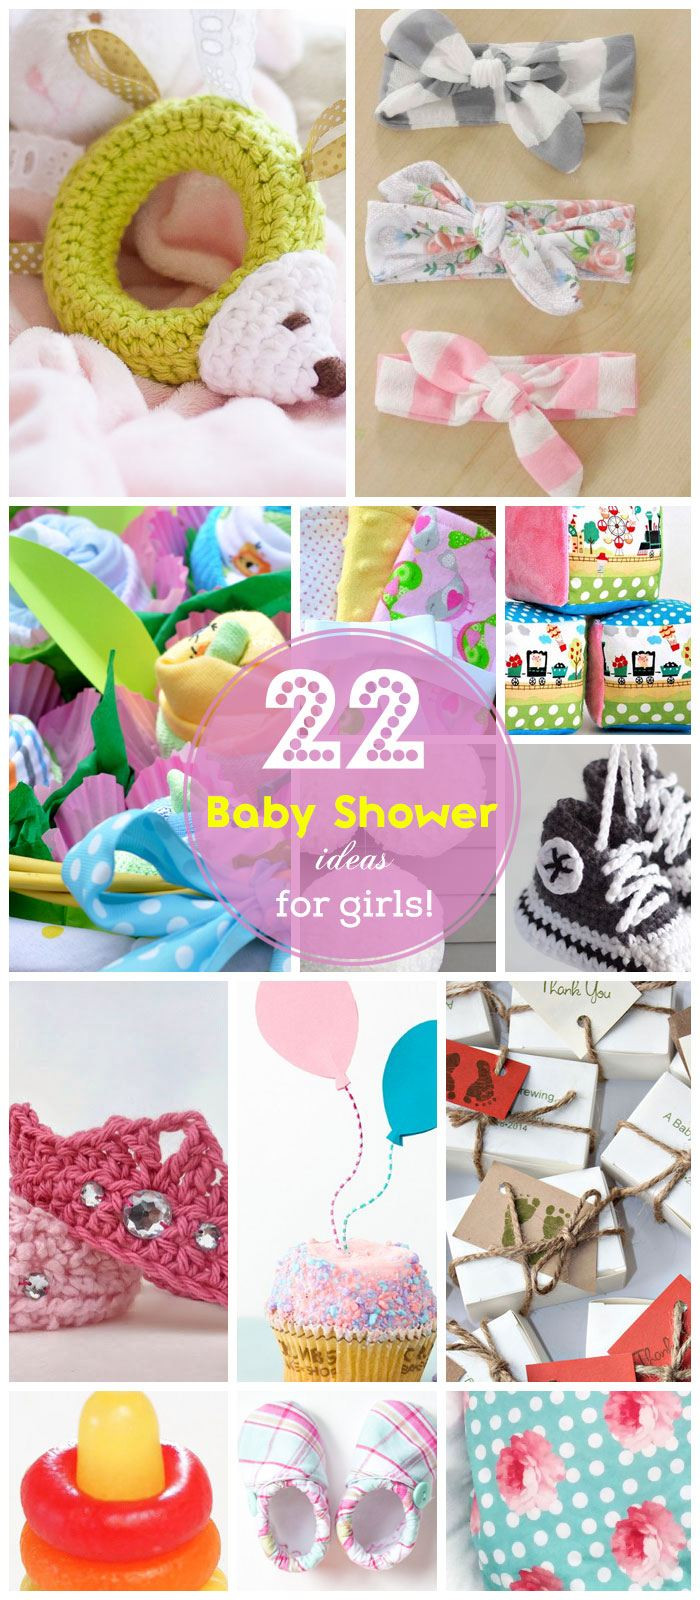 Baby Shower DIY Ideas
 55 Easy Baby Shower Ideas for Girls